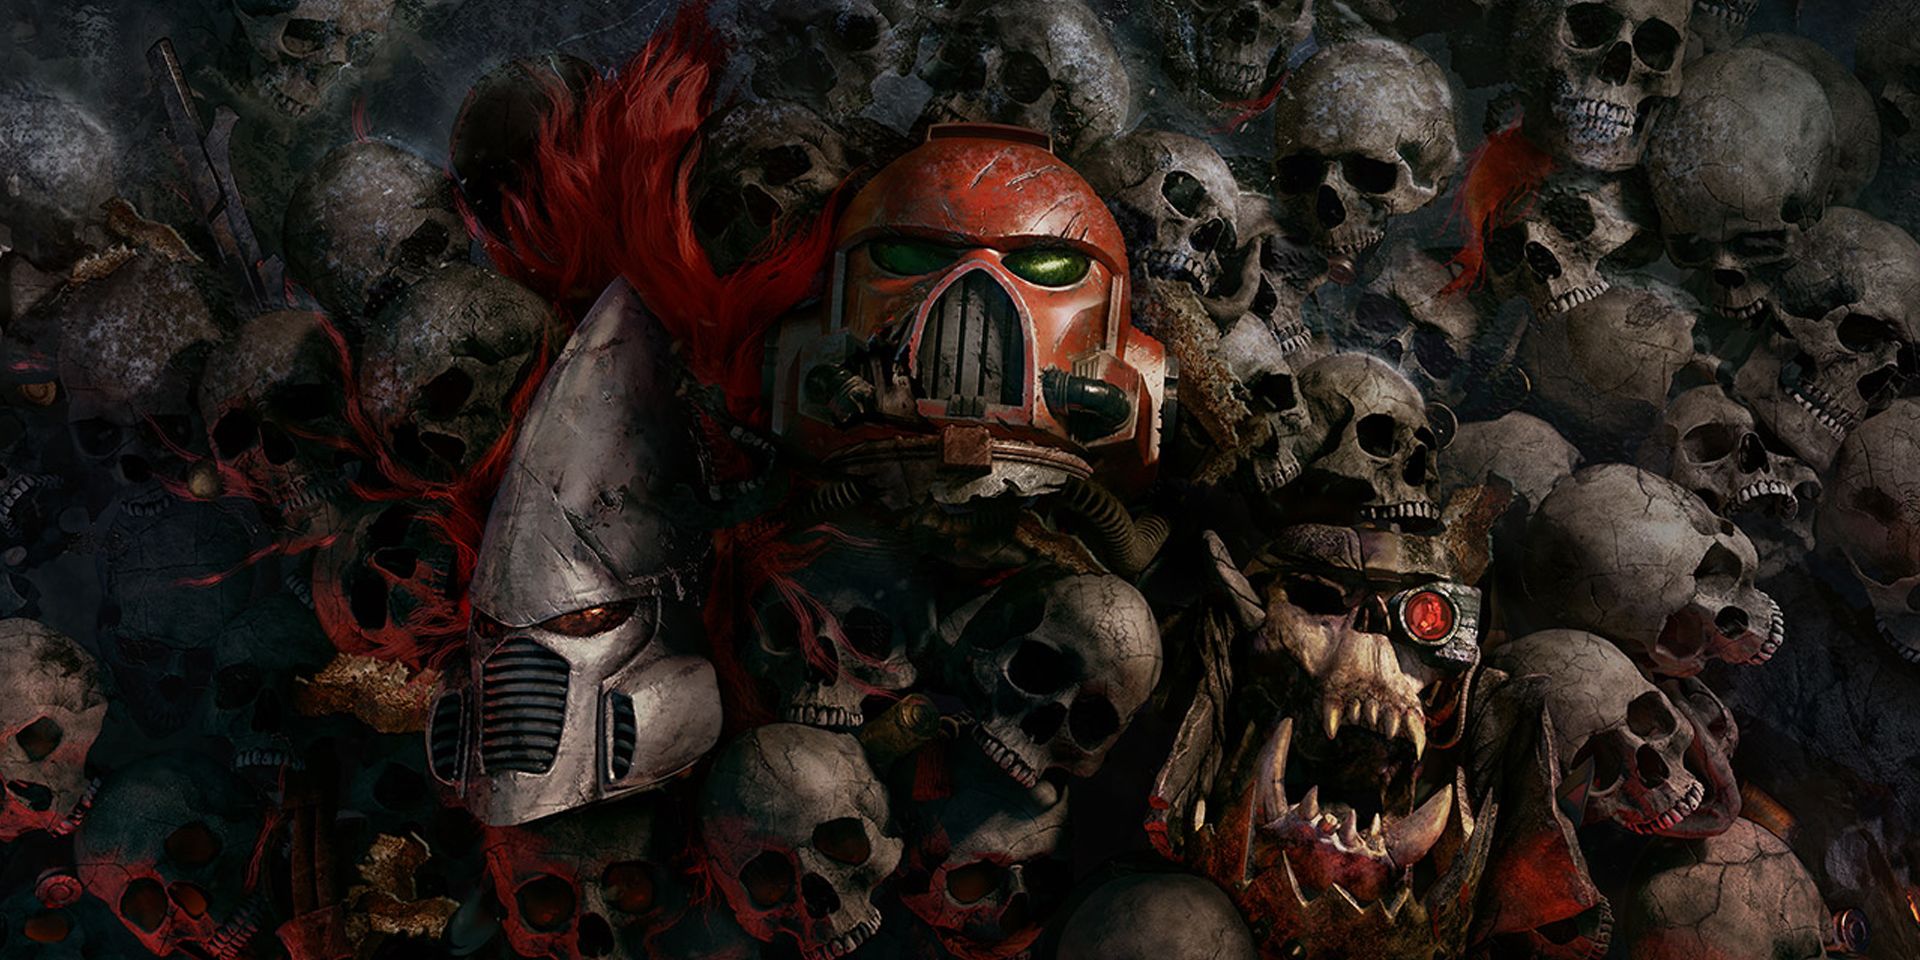 Cover Art for Warhammer 40,000 Dawn of War 3